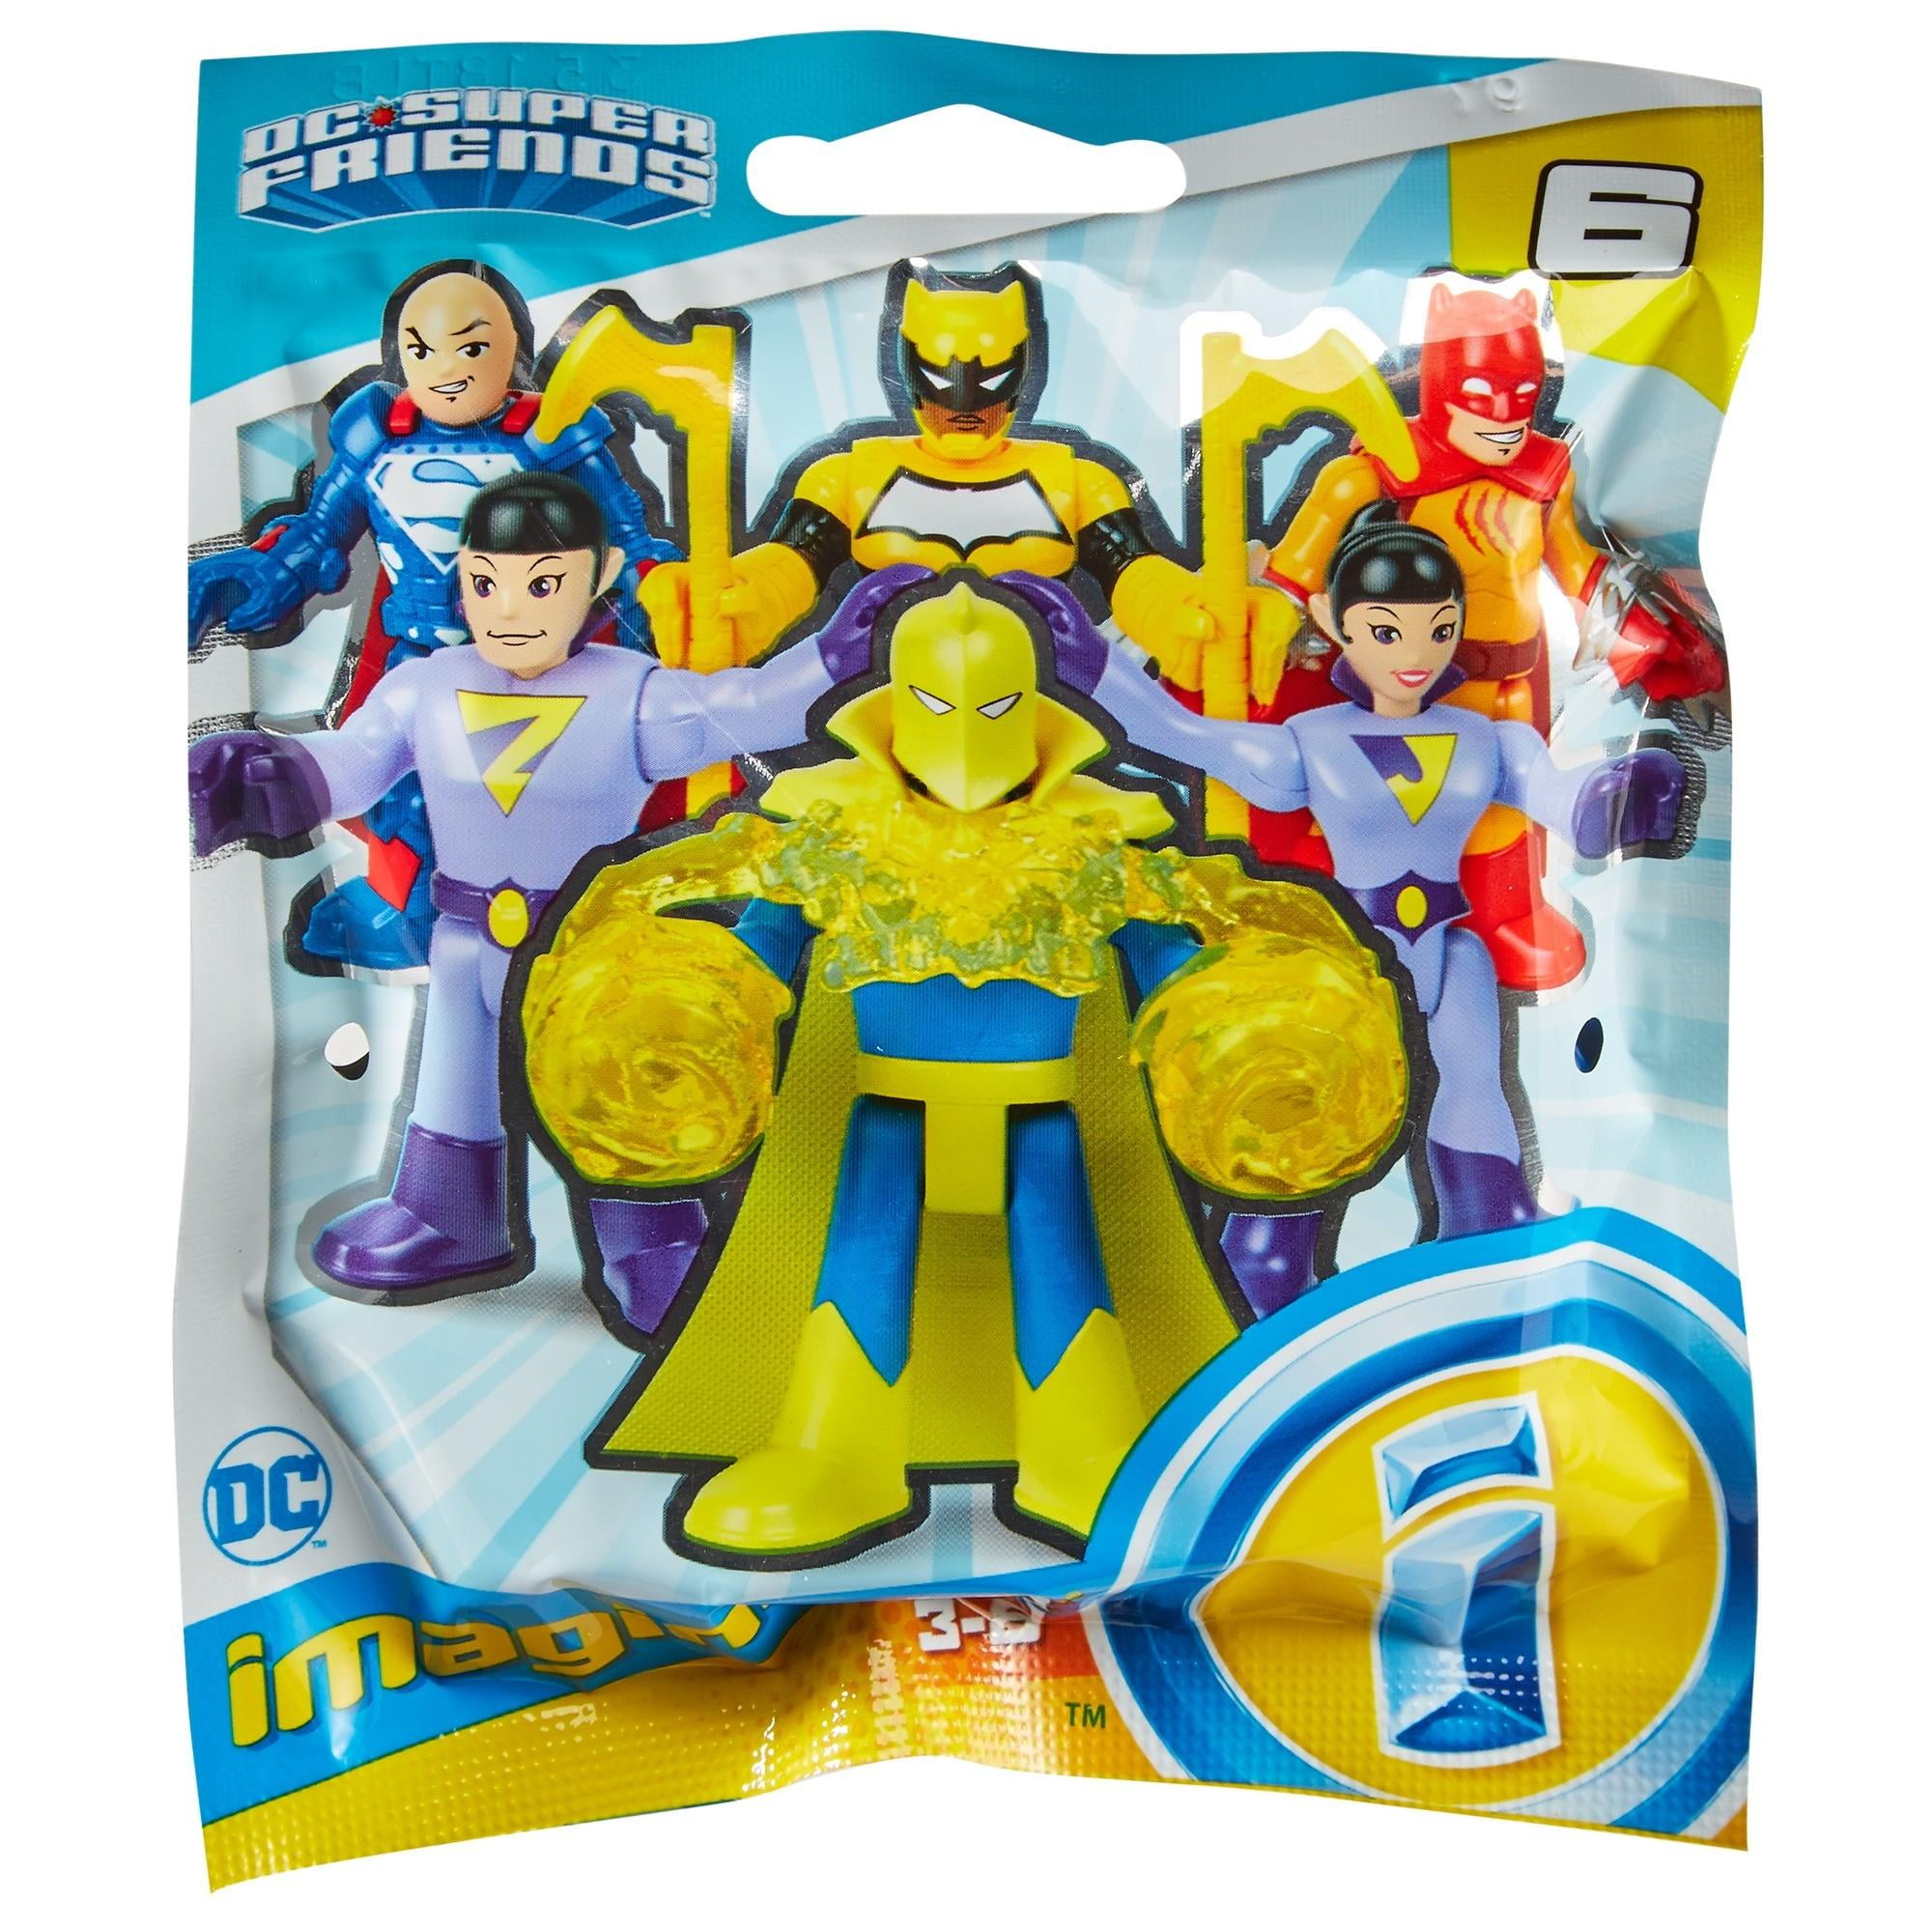 Lot 3 Imaginext DC Super Friends SUPER GIRL MAN Fisher Price figure Comics Toys 